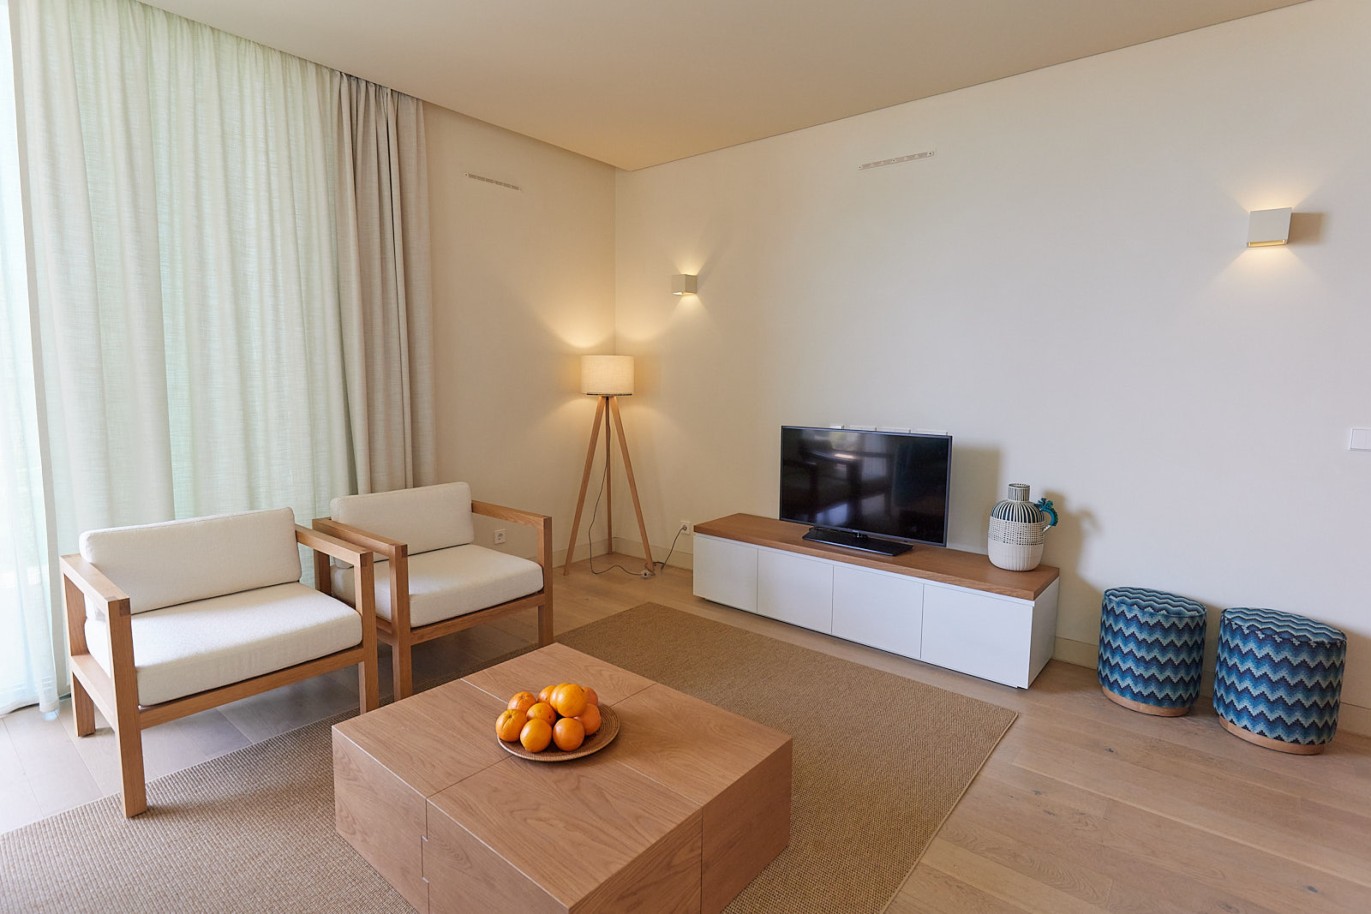 3 bedroom apartment in resort, for sale in Porches, Algarve_230724